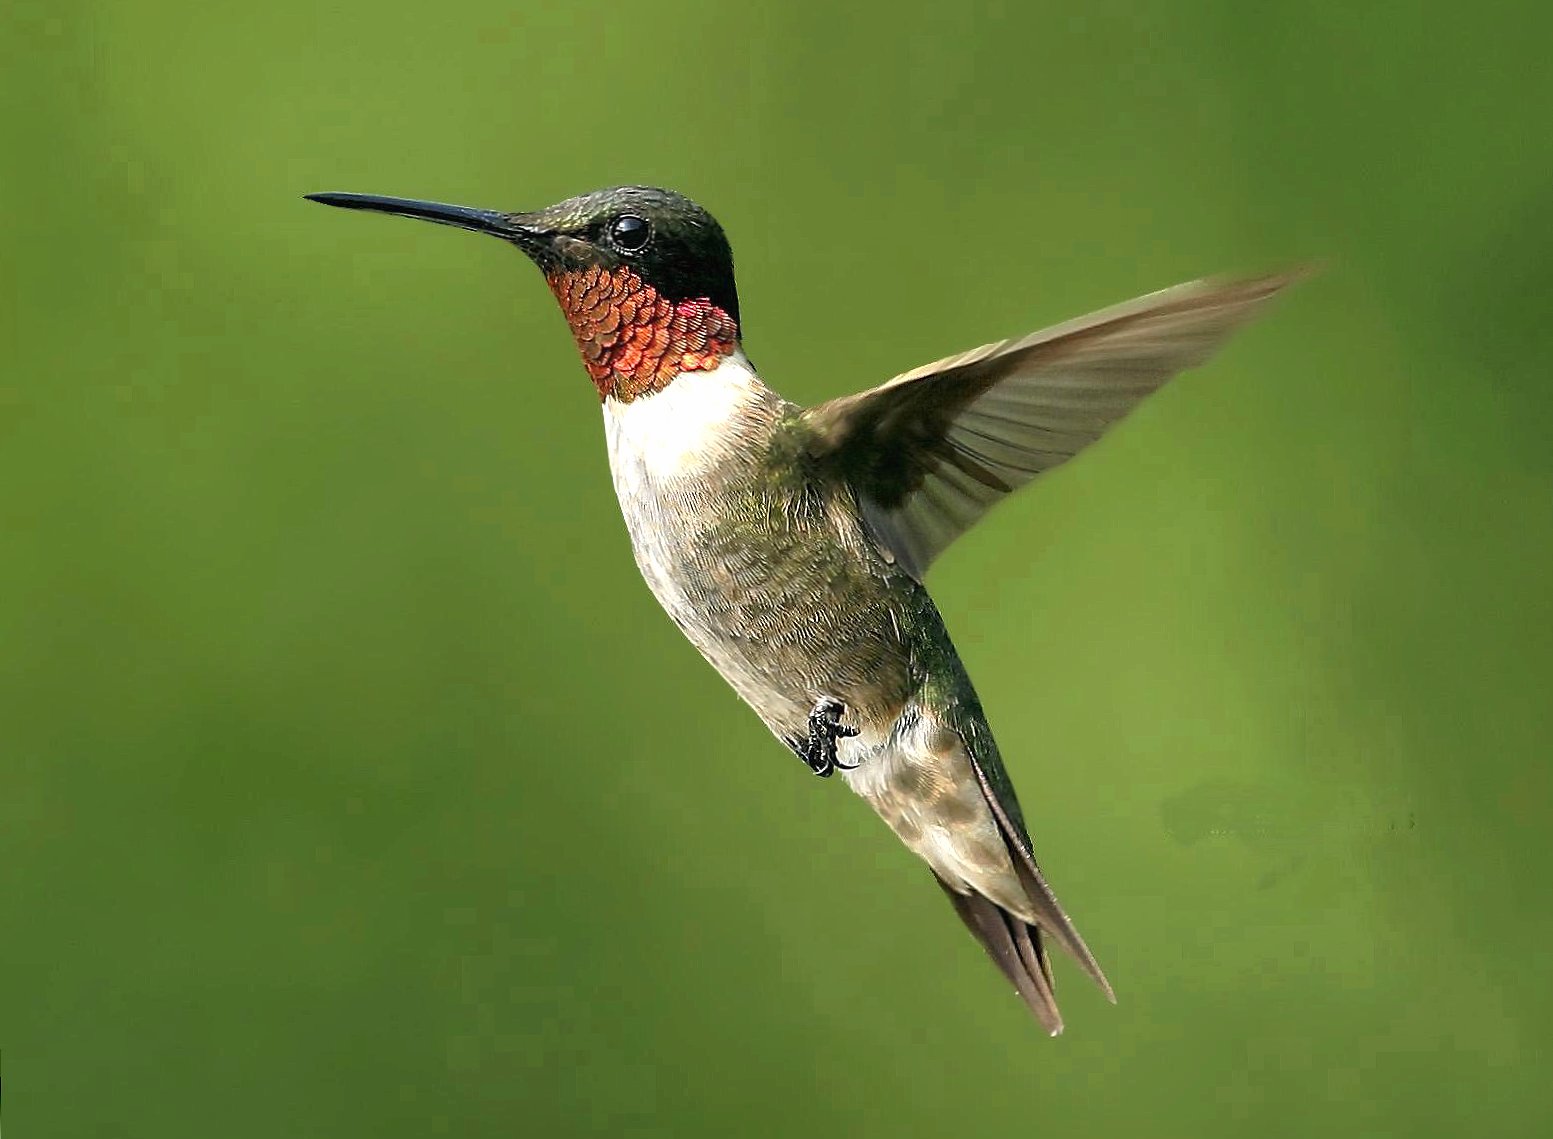 Flying hummingbird at 2048 x 2048 iPad size wallpapers HD quality